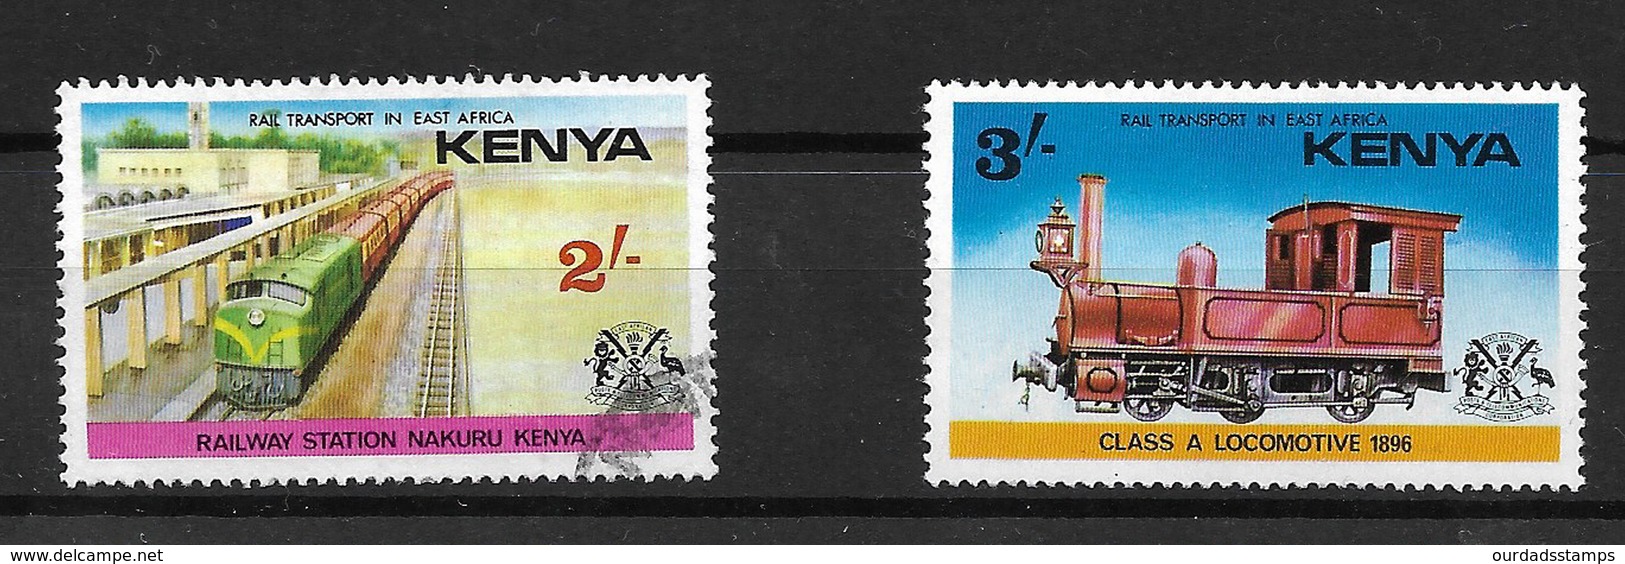 Kenya 1976 Railway Transport Complete Set Mint (2/- Used) (6553) - Kenya (1963-...)